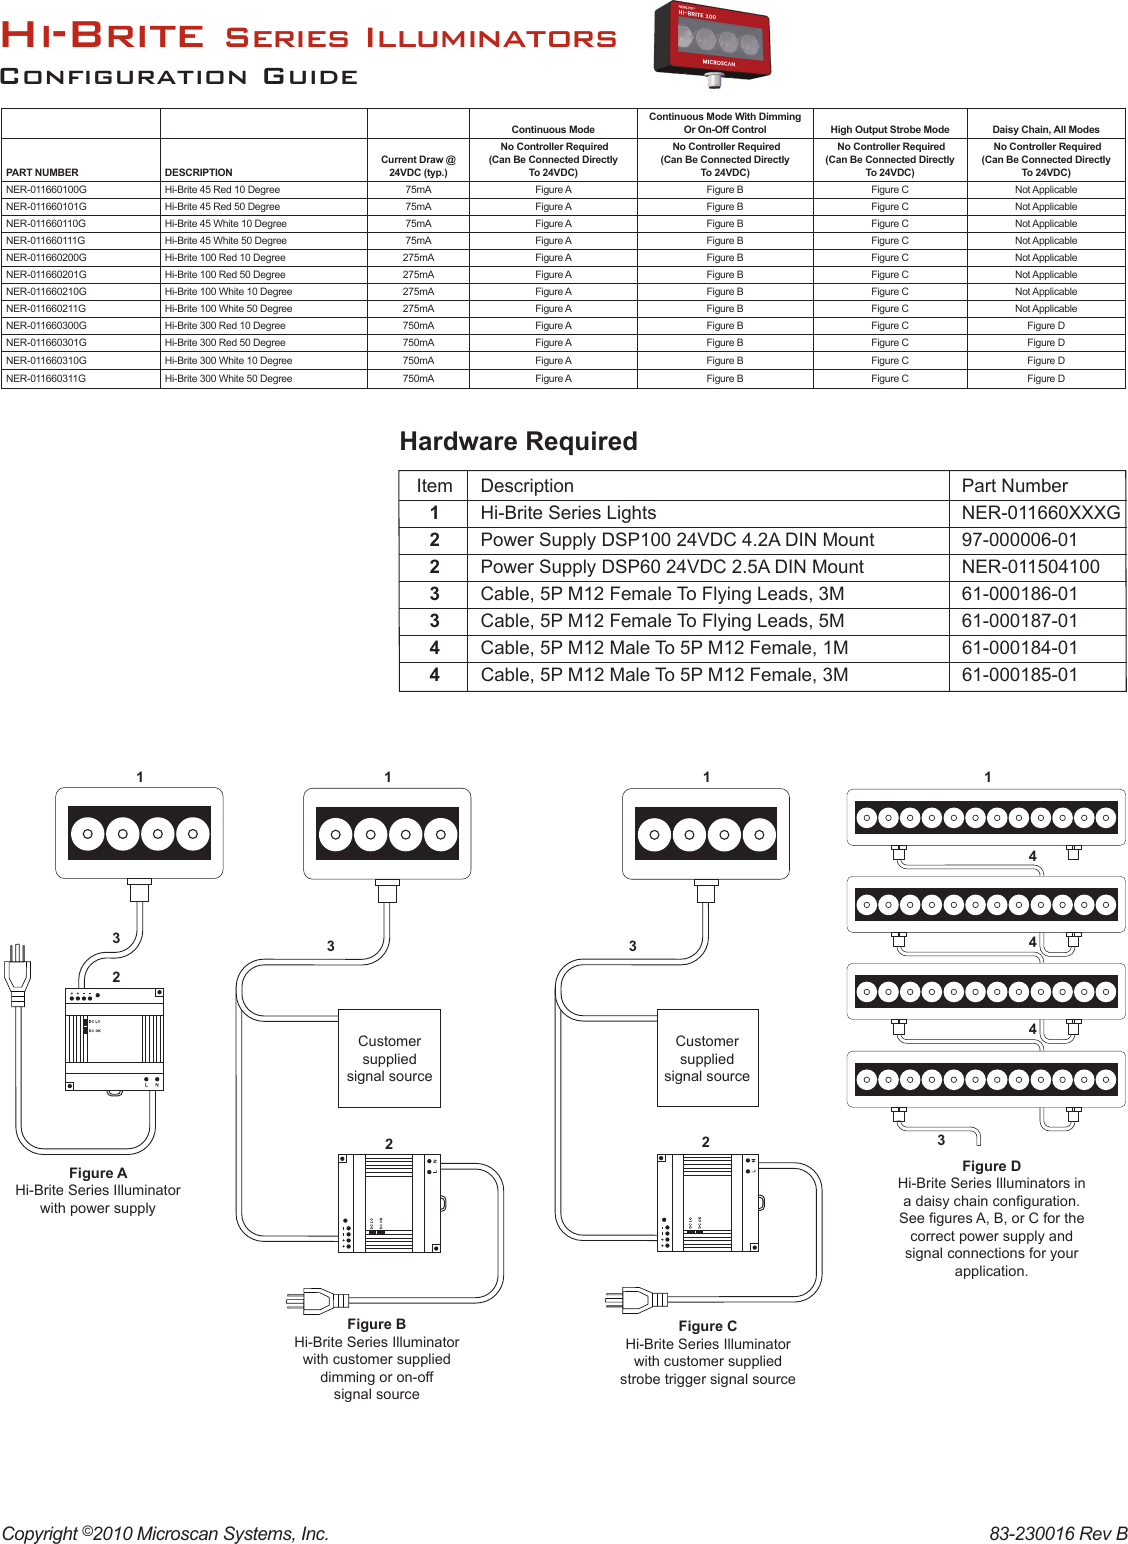 Page 1 of 2 - HI-BRITE Series Illuminator Configuration Guide  Hibriteconfigguide